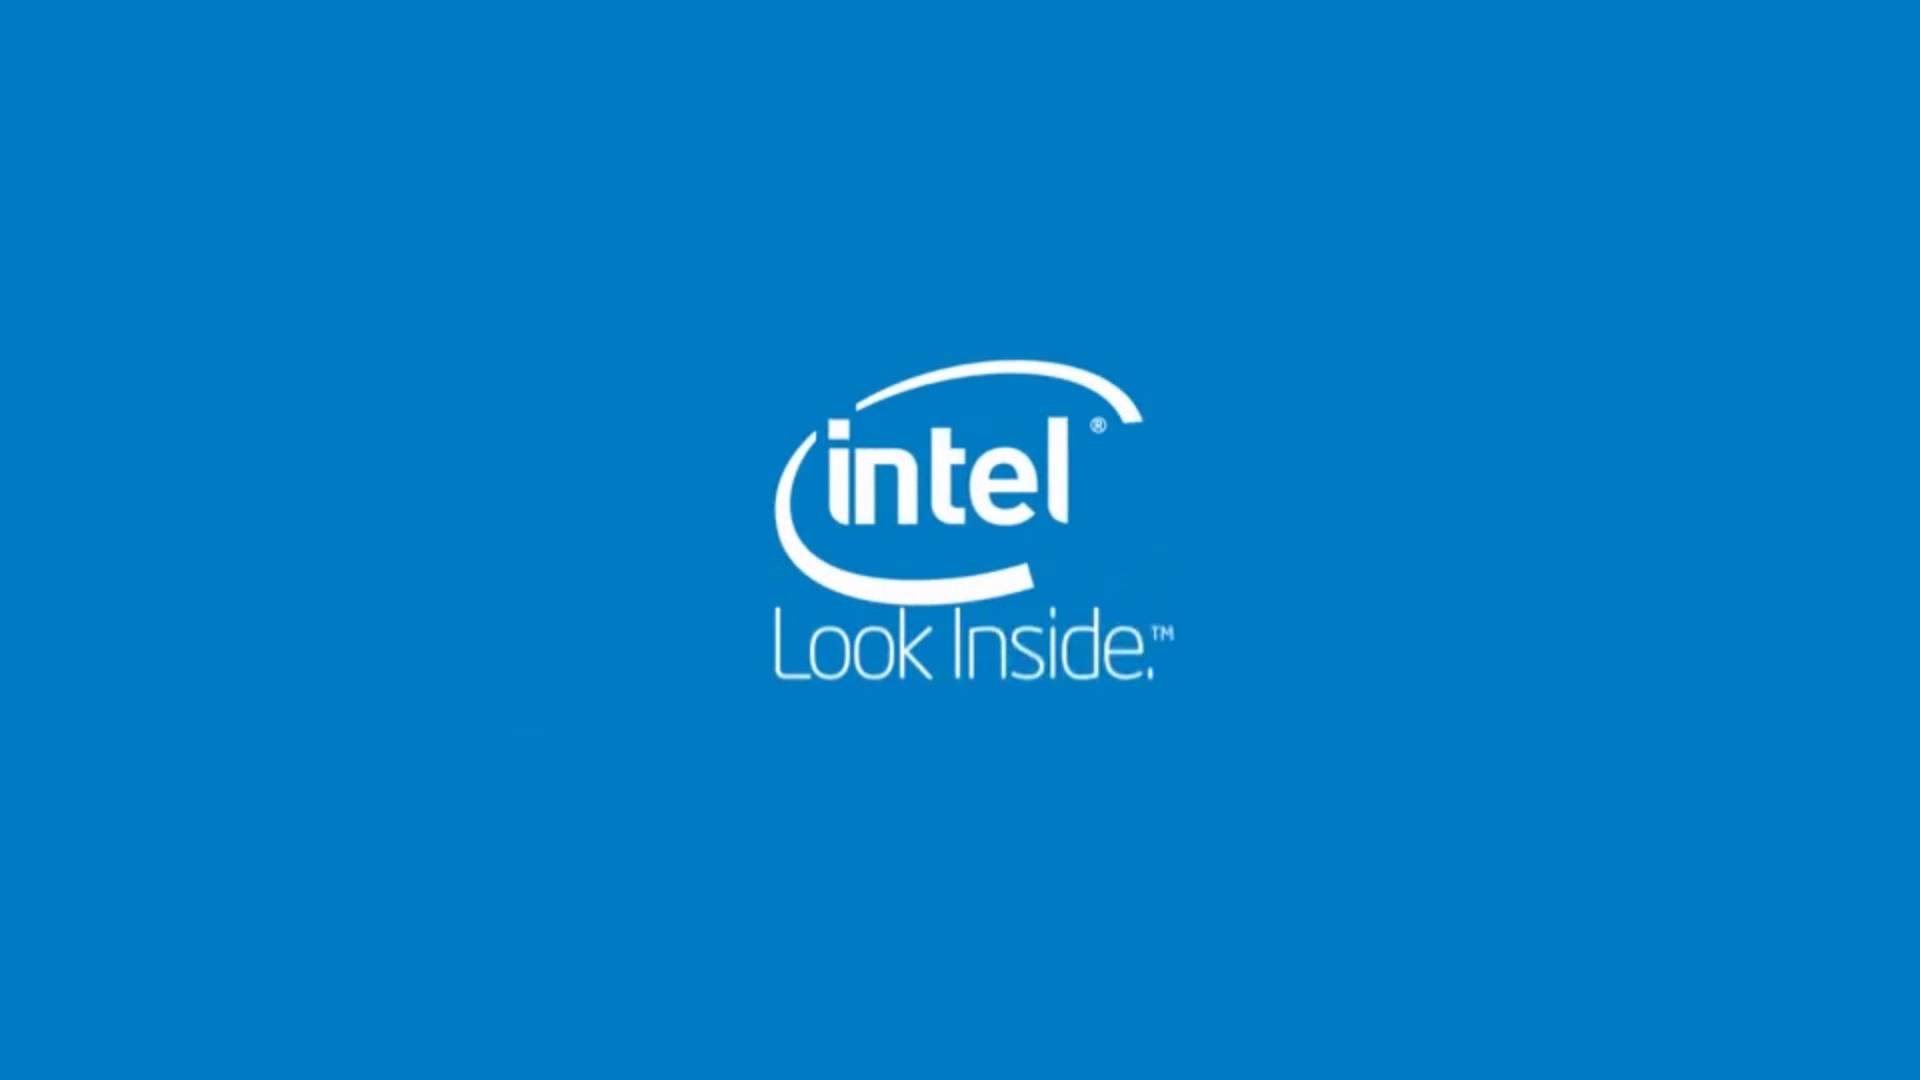 Intel Logo Wallpaper Images ghm3v5c3 Yoanu